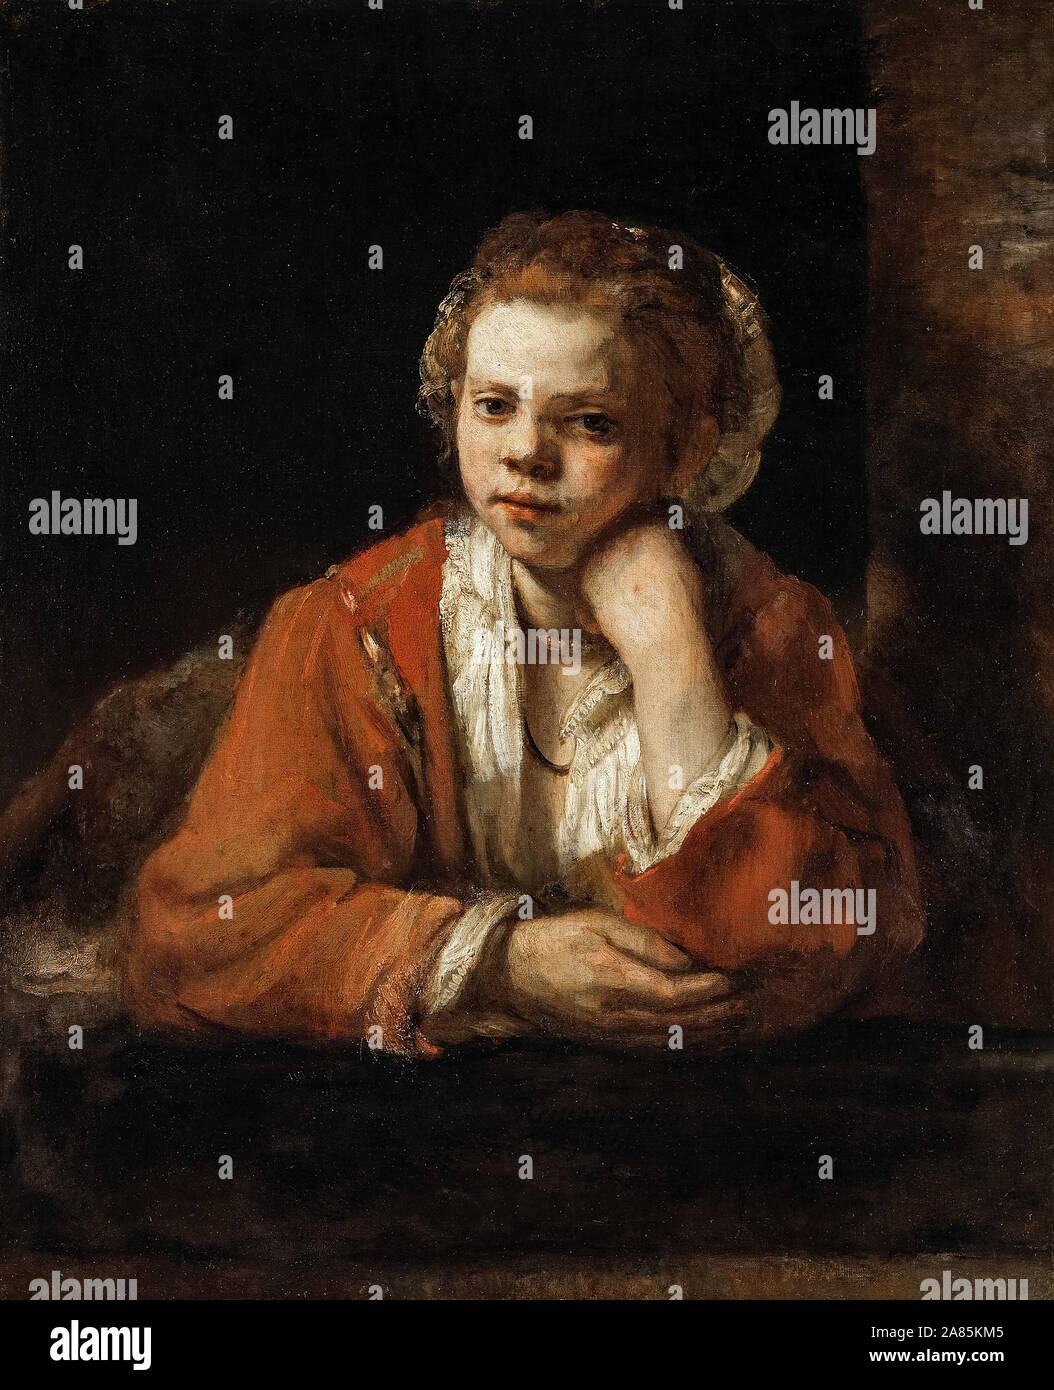 https://c8.alamy.com/comp/2A85KM5/rembrandt-van-rijn-the-kitchen-maid-girl-at-a-window-portrait-painting-1651-2A85KM5.jpg